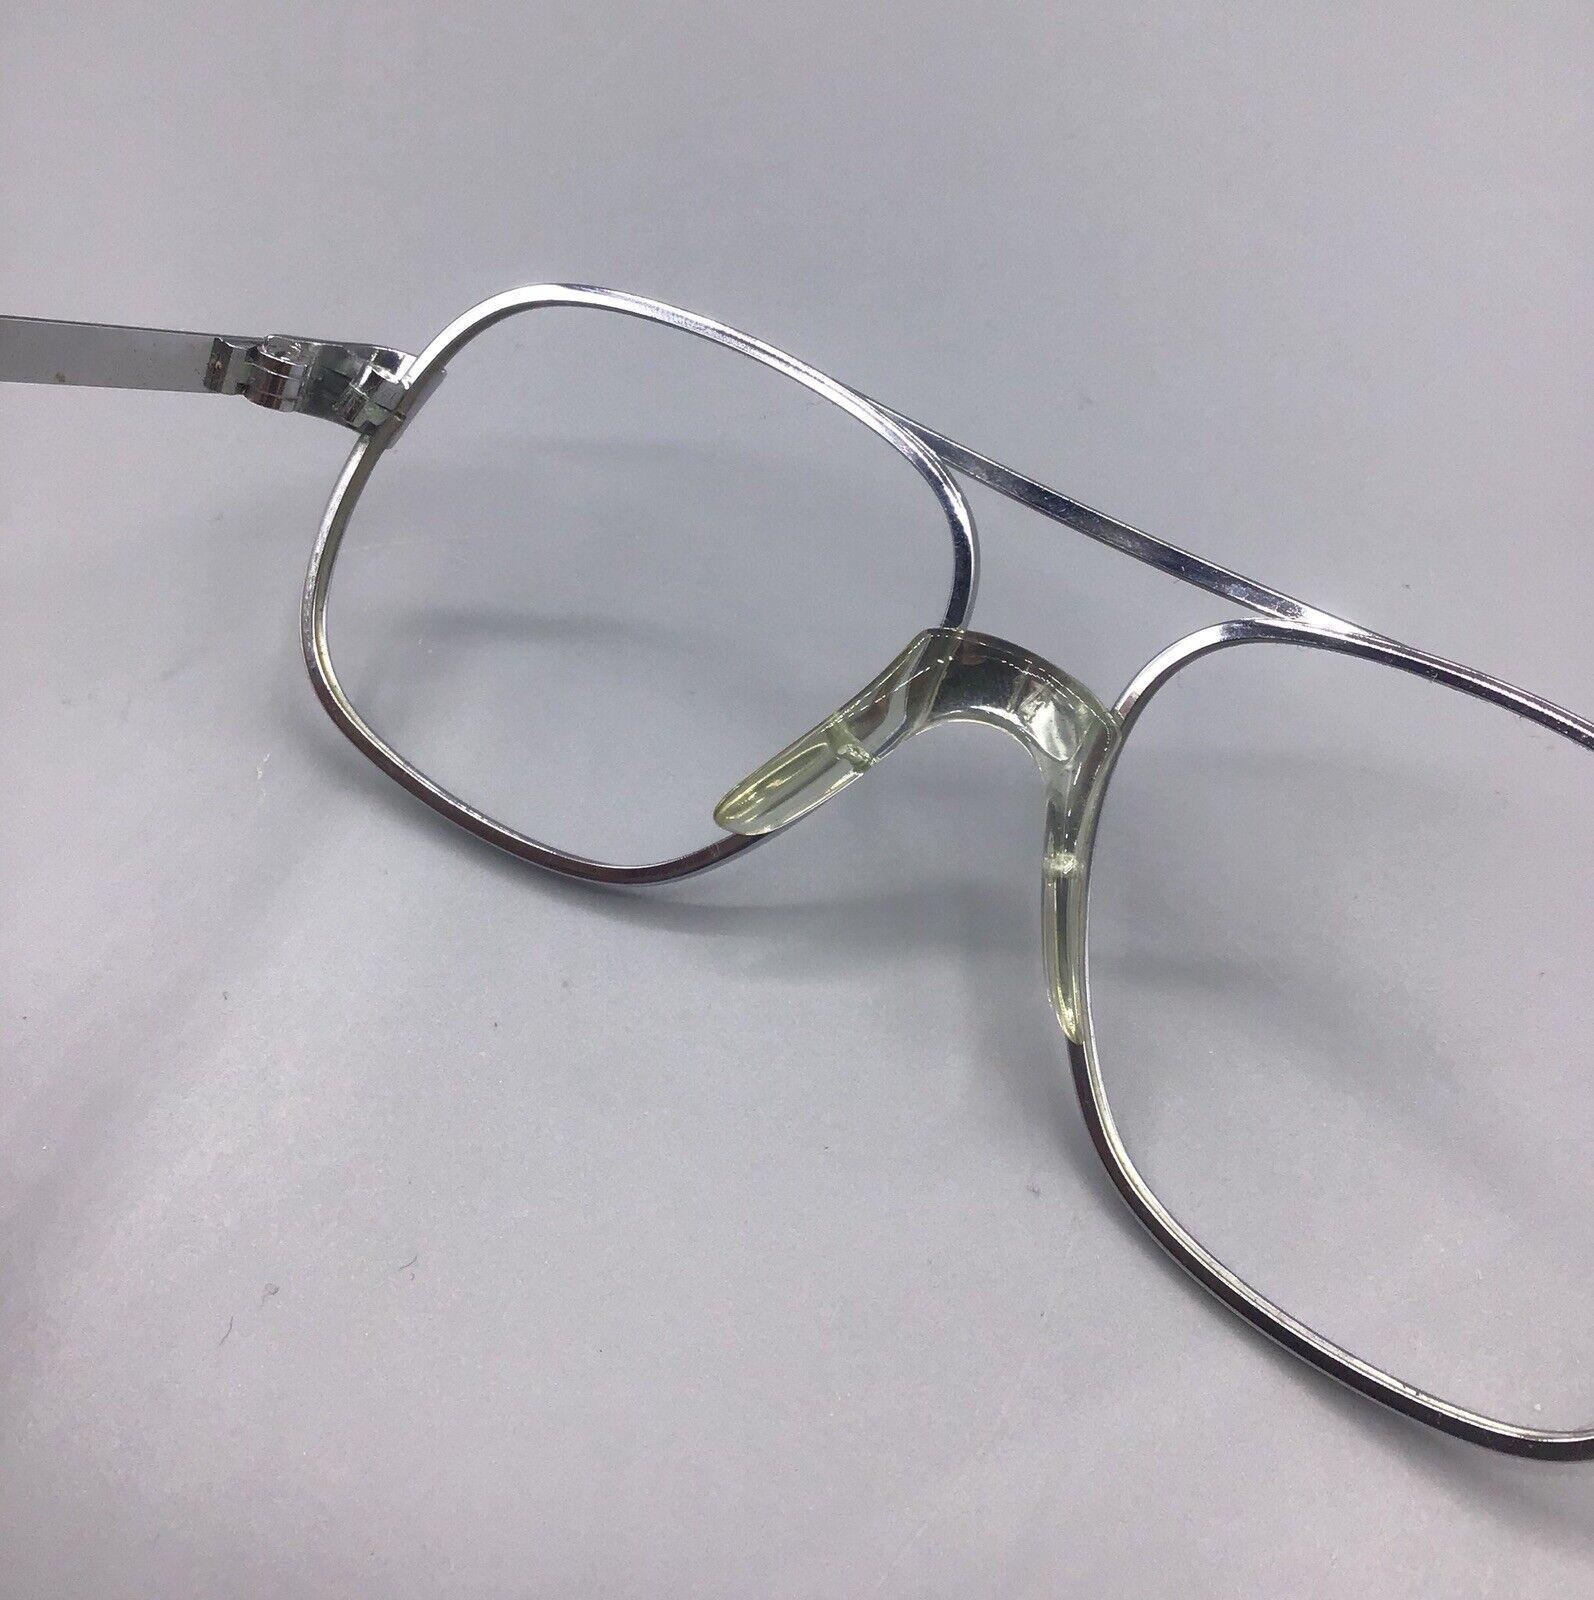 Rodenstock Stephan occhiale vintage eyewear frame brillen